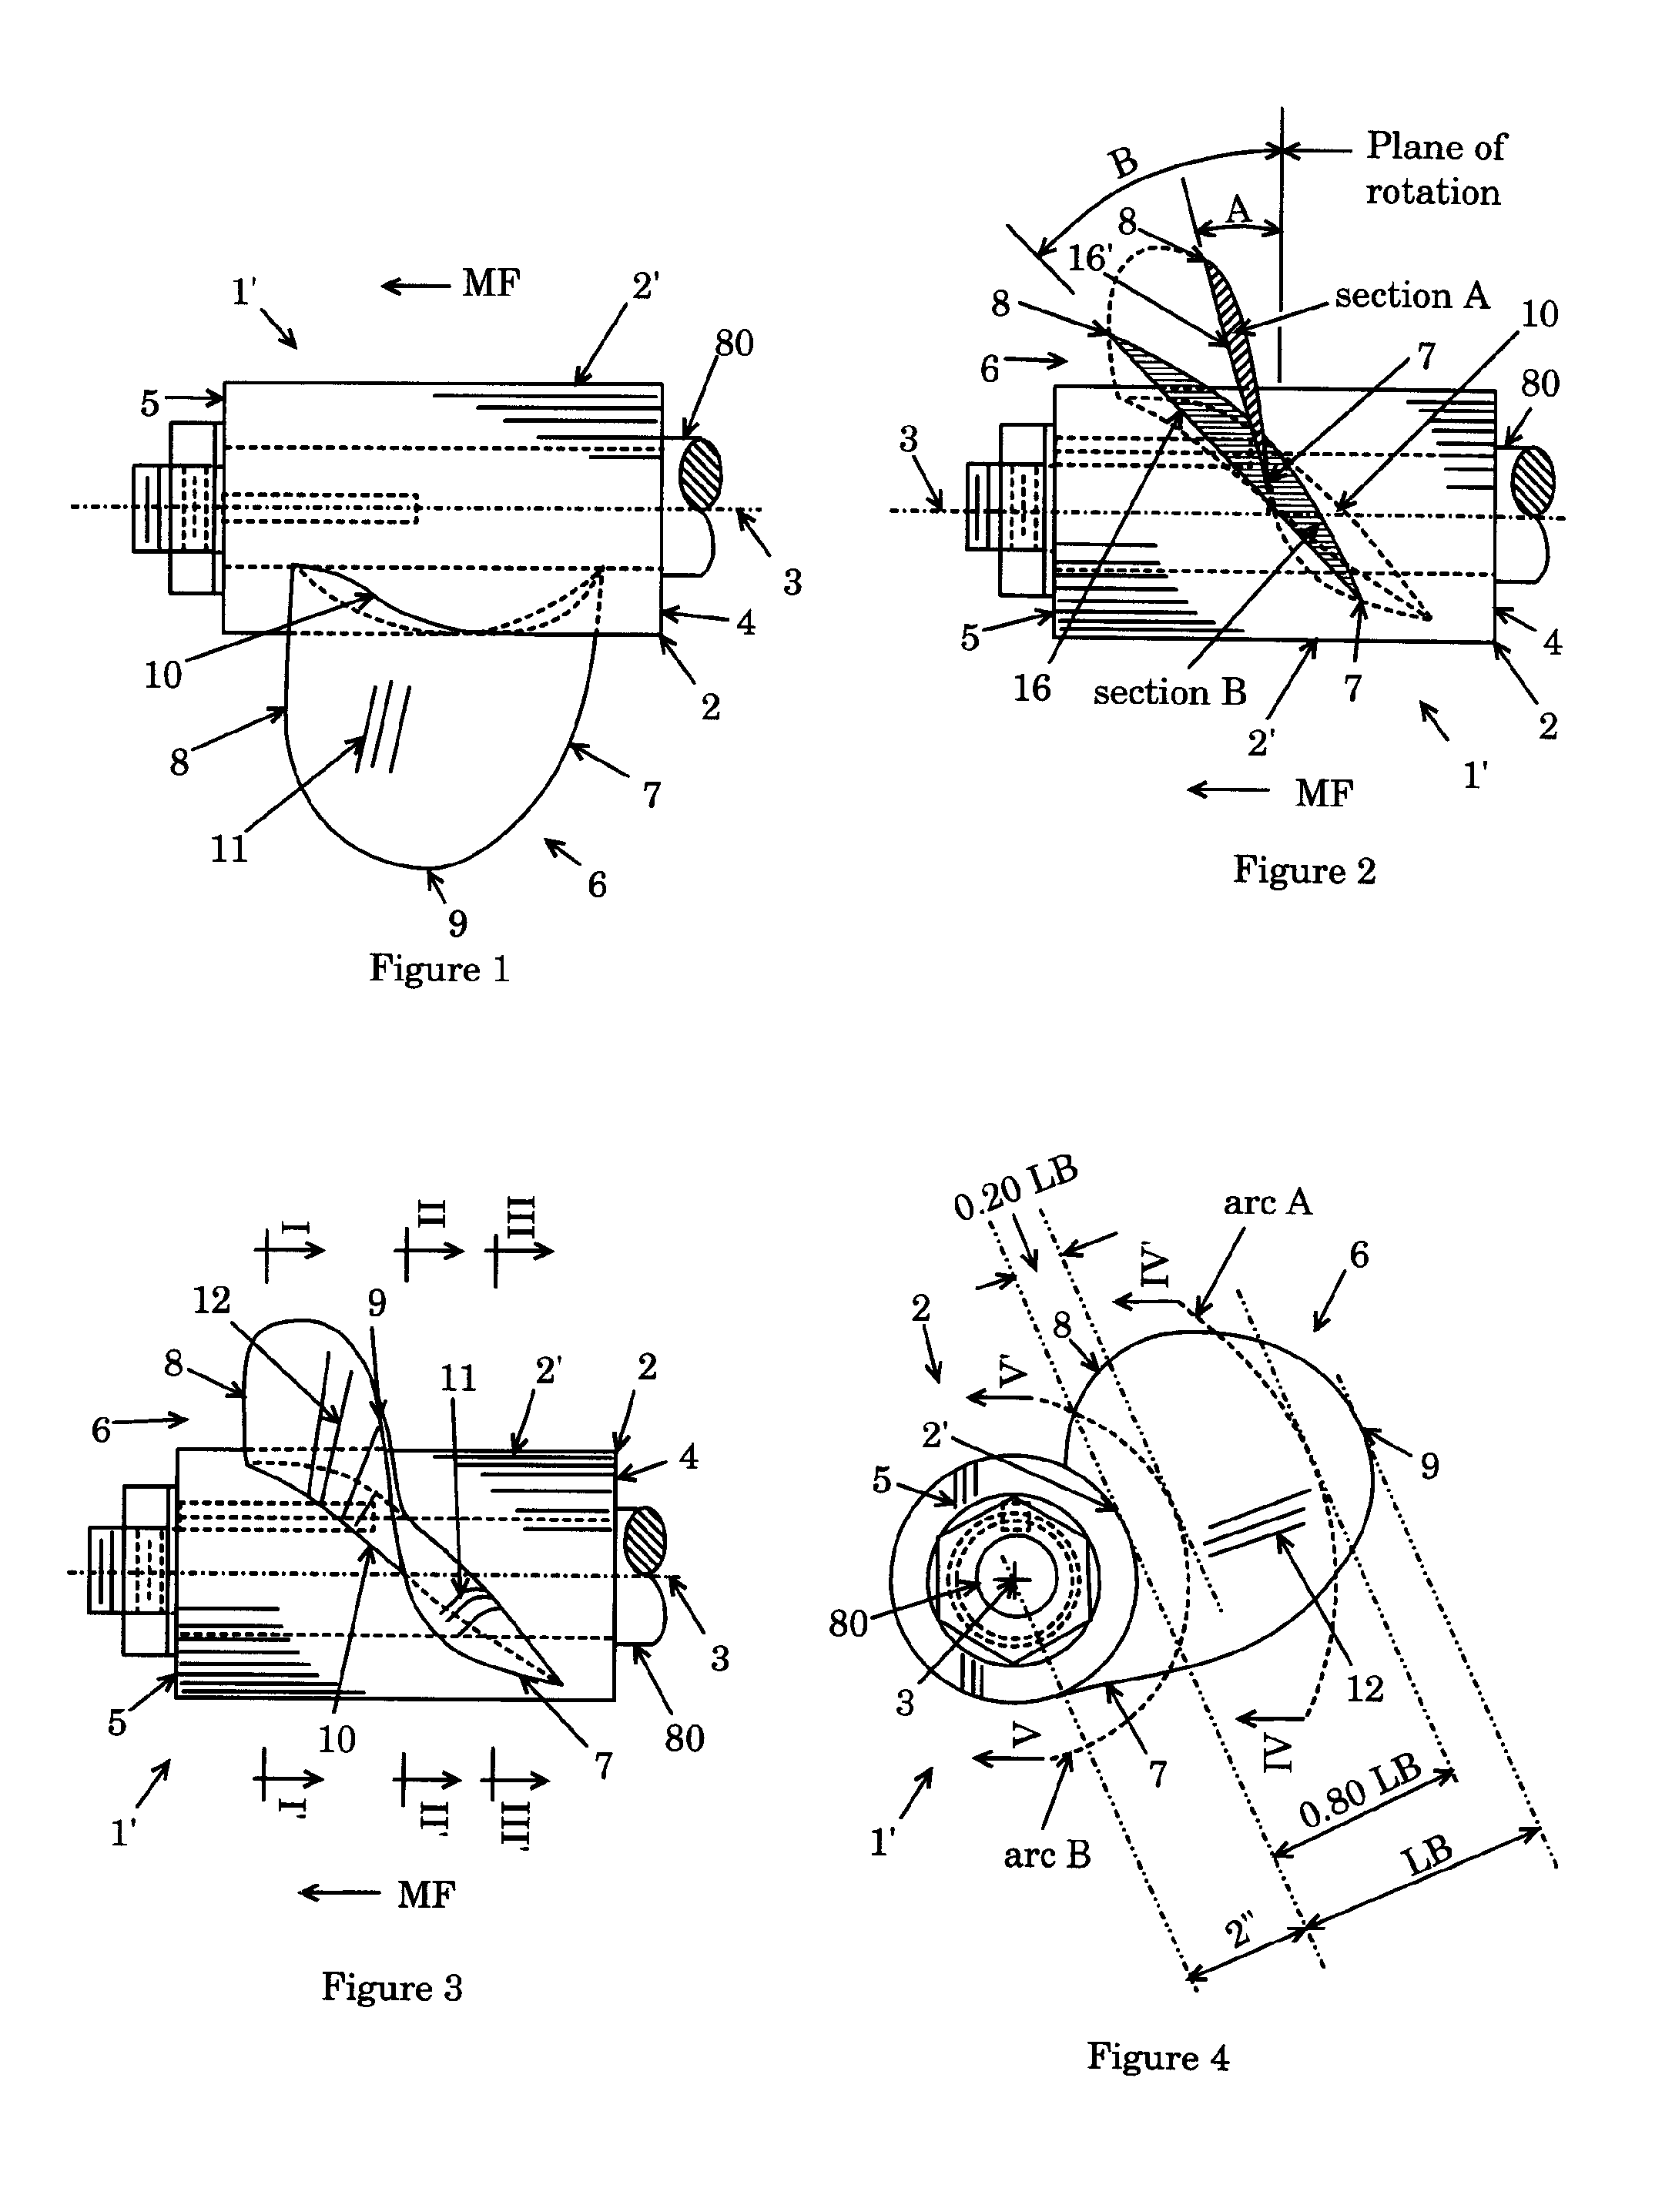 Blade Orientation of an Impeller or Propeller